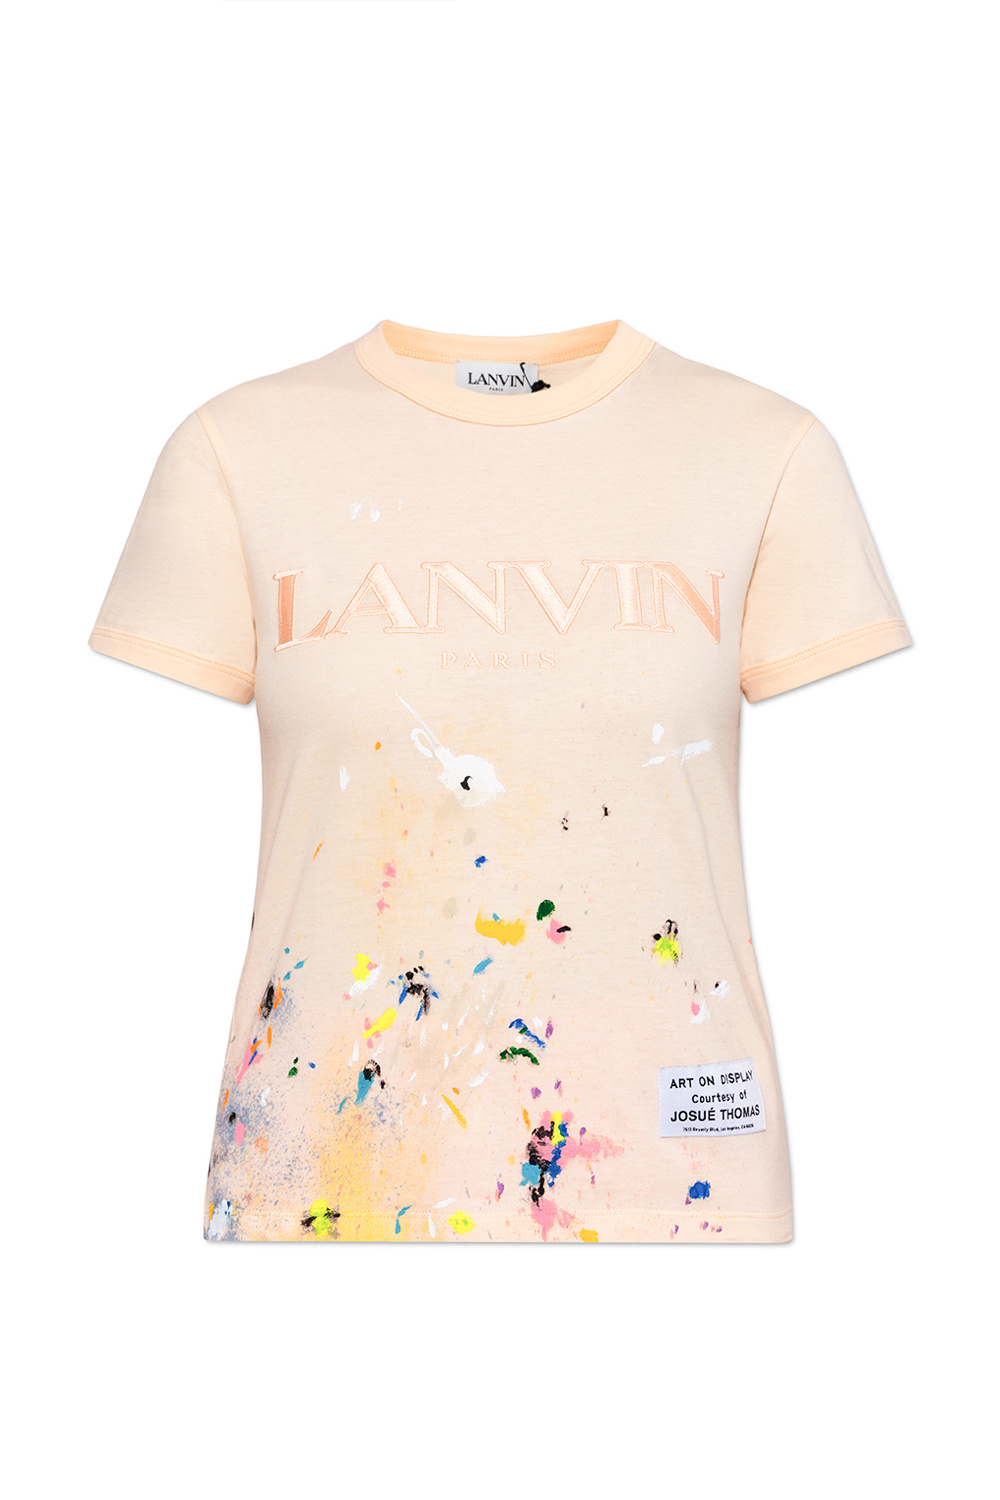 Lanvin Lanvin x Gallery Dept | Women's Clothing | Vitkac